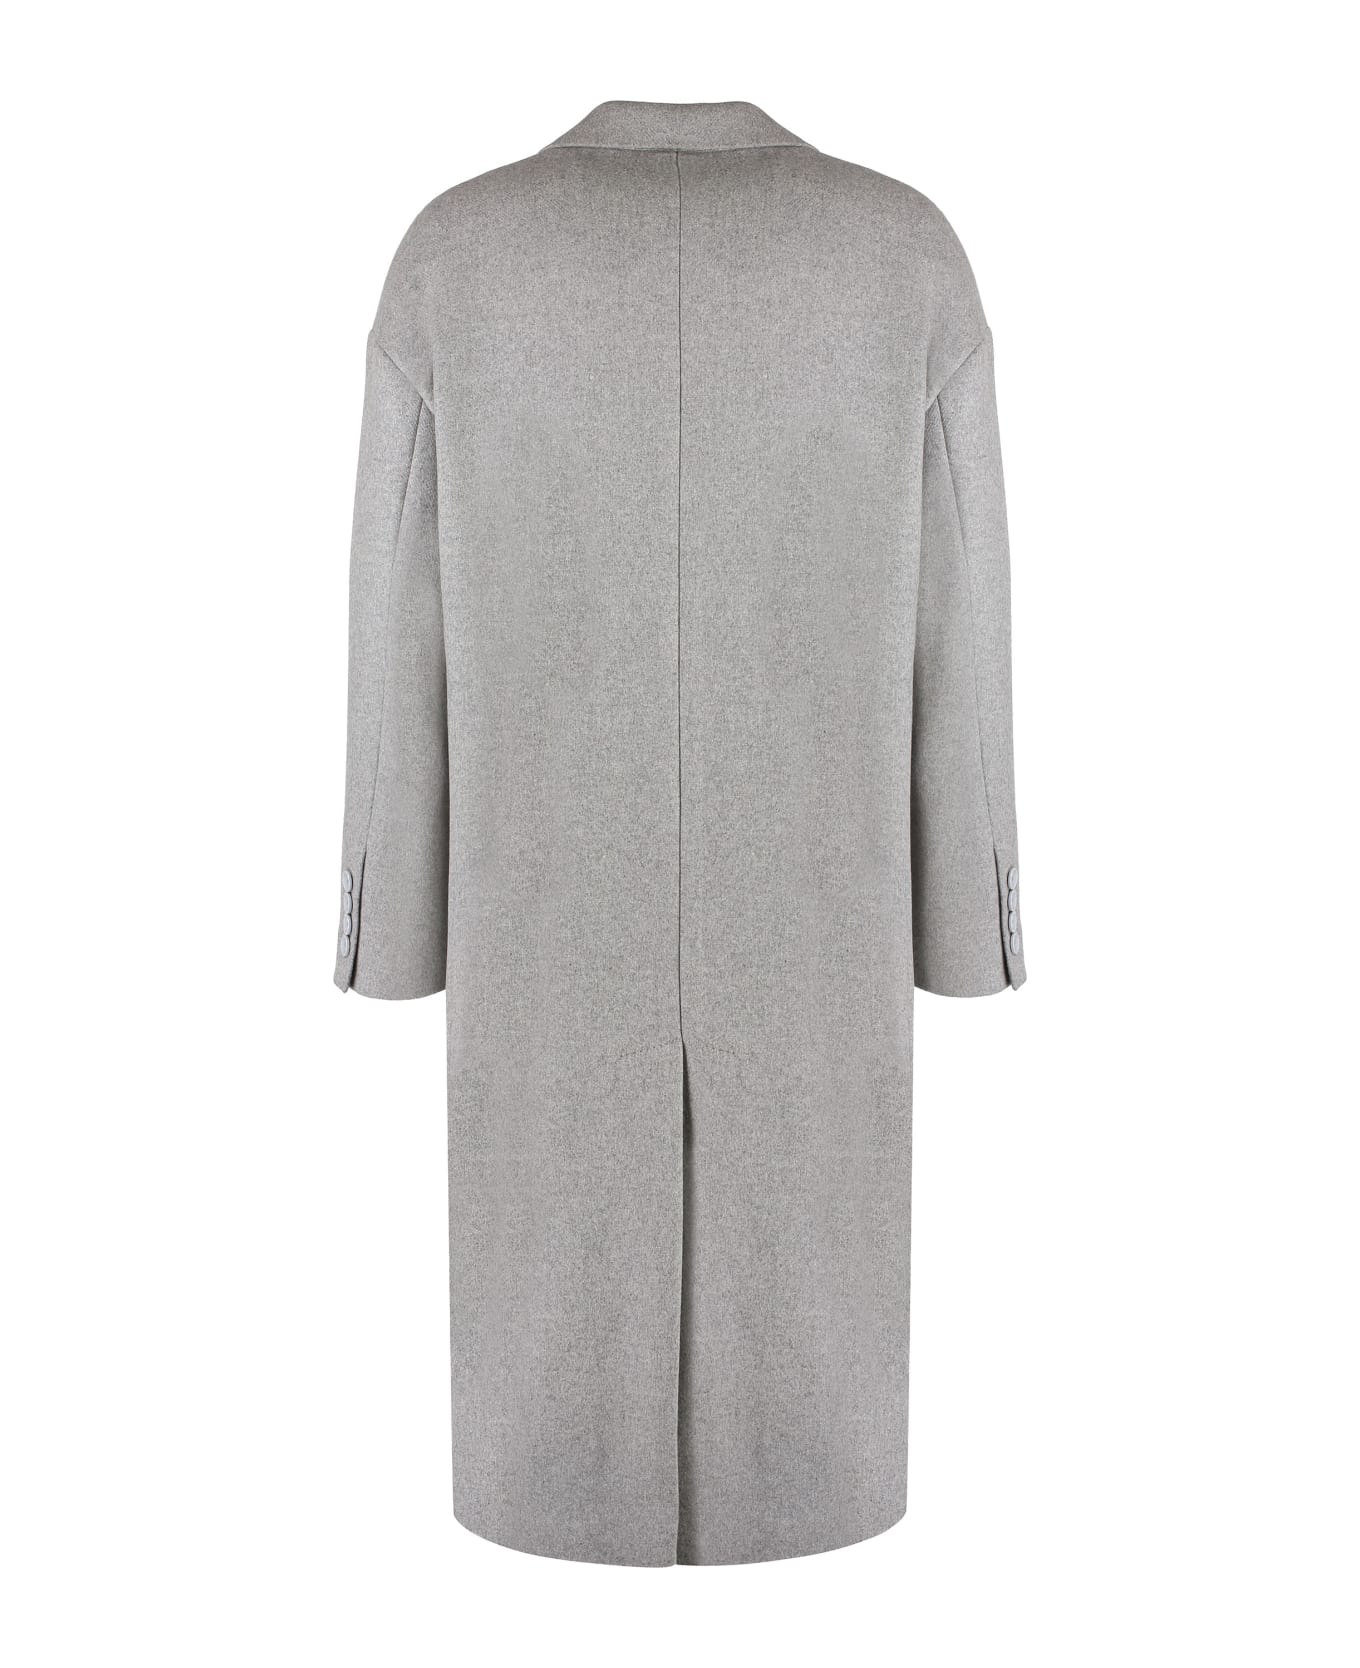 Dolce & Gabbana Wool Blend Coat - grey